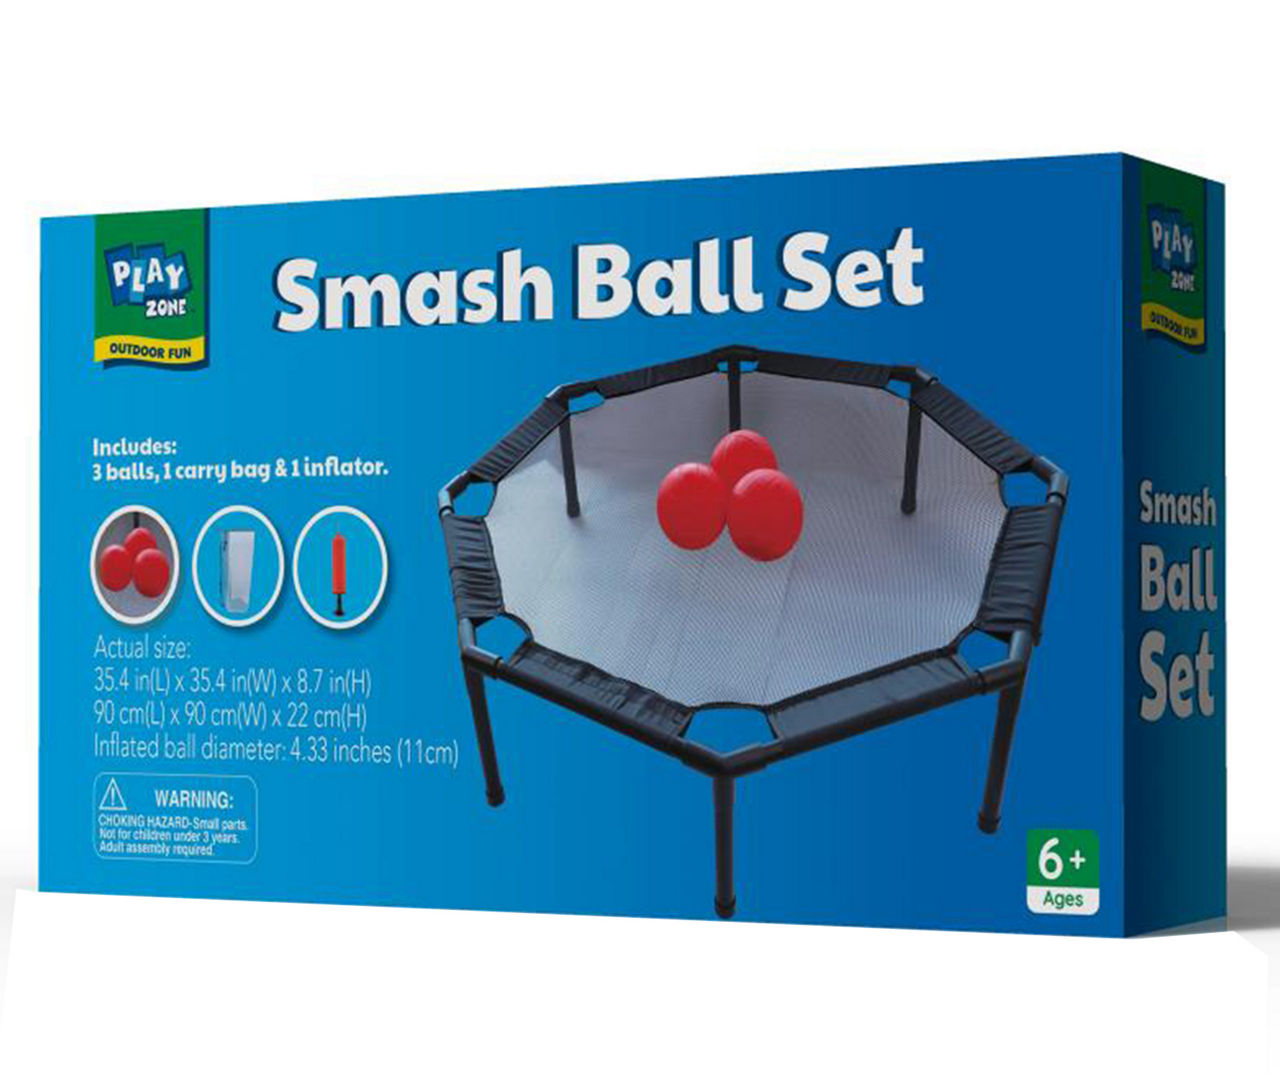 Play Zone Smash Ball Set